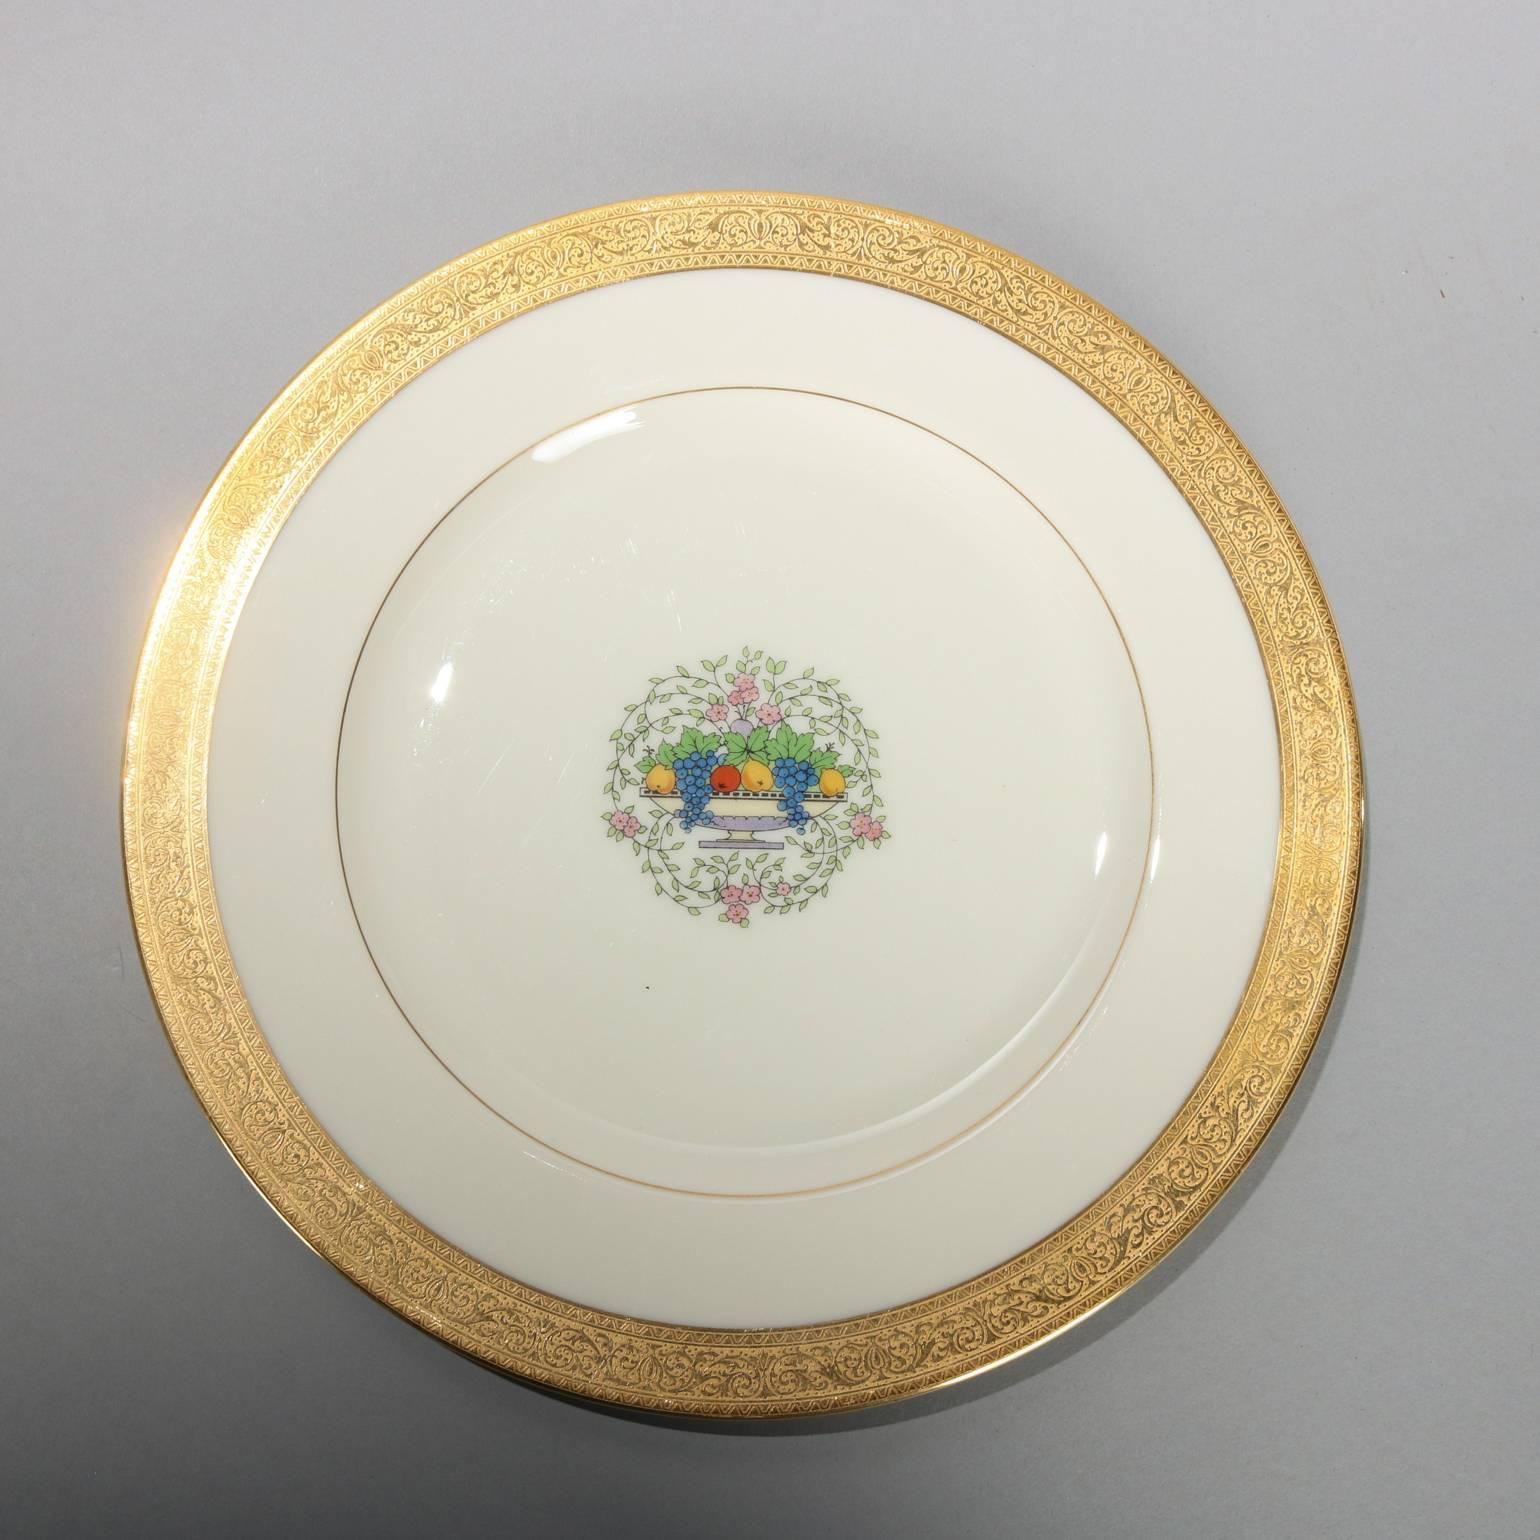 14 vintage Lenox China porcelain plates made for Ovington Bros., New York, feature central Corbeille a Fleurs (flower basket) with gold gilt rim, 20th century.

Measure - 10.25" diam.